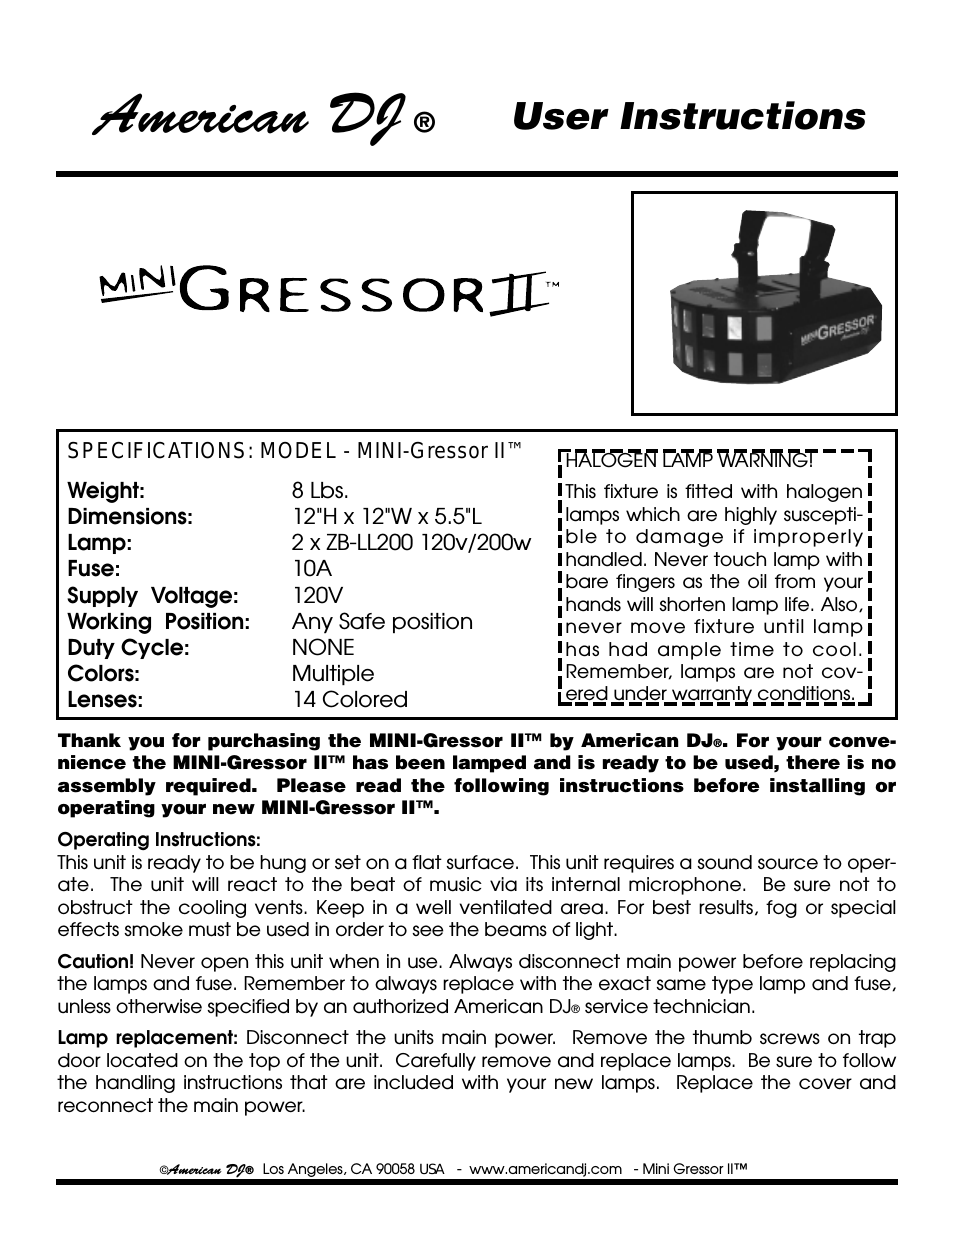 Mini-Gressor II